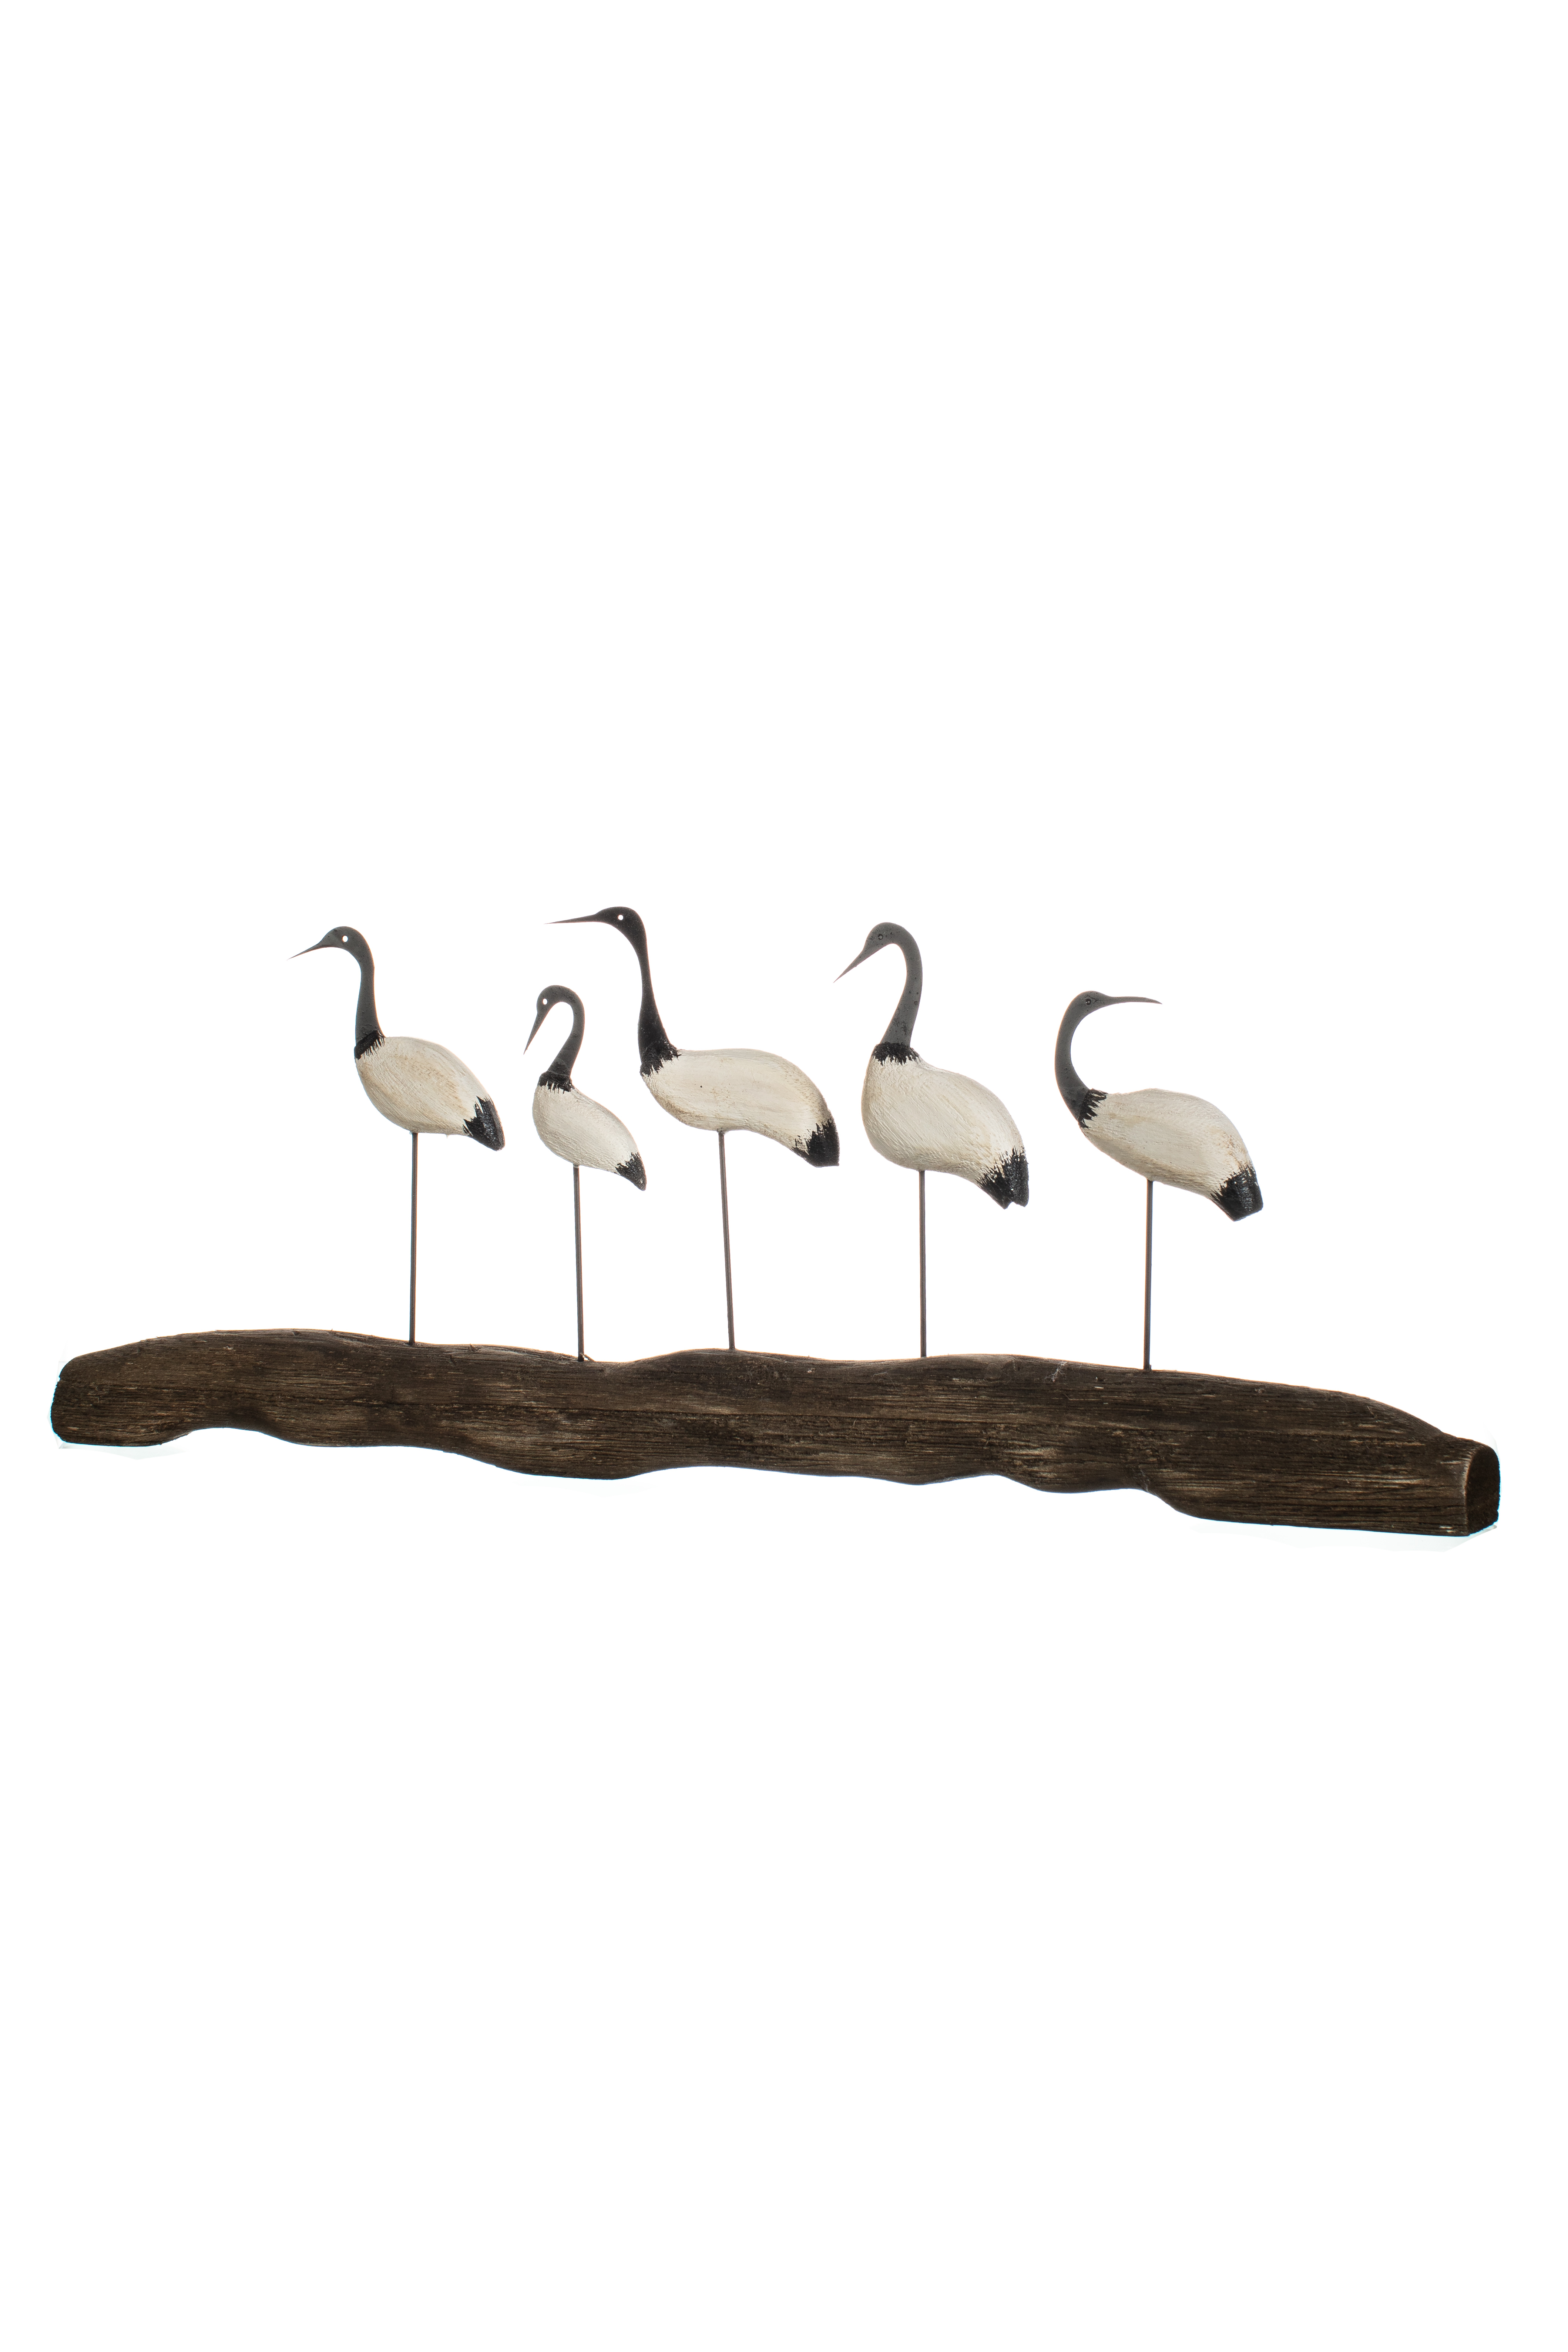 Five Shore Birds on Driftwood